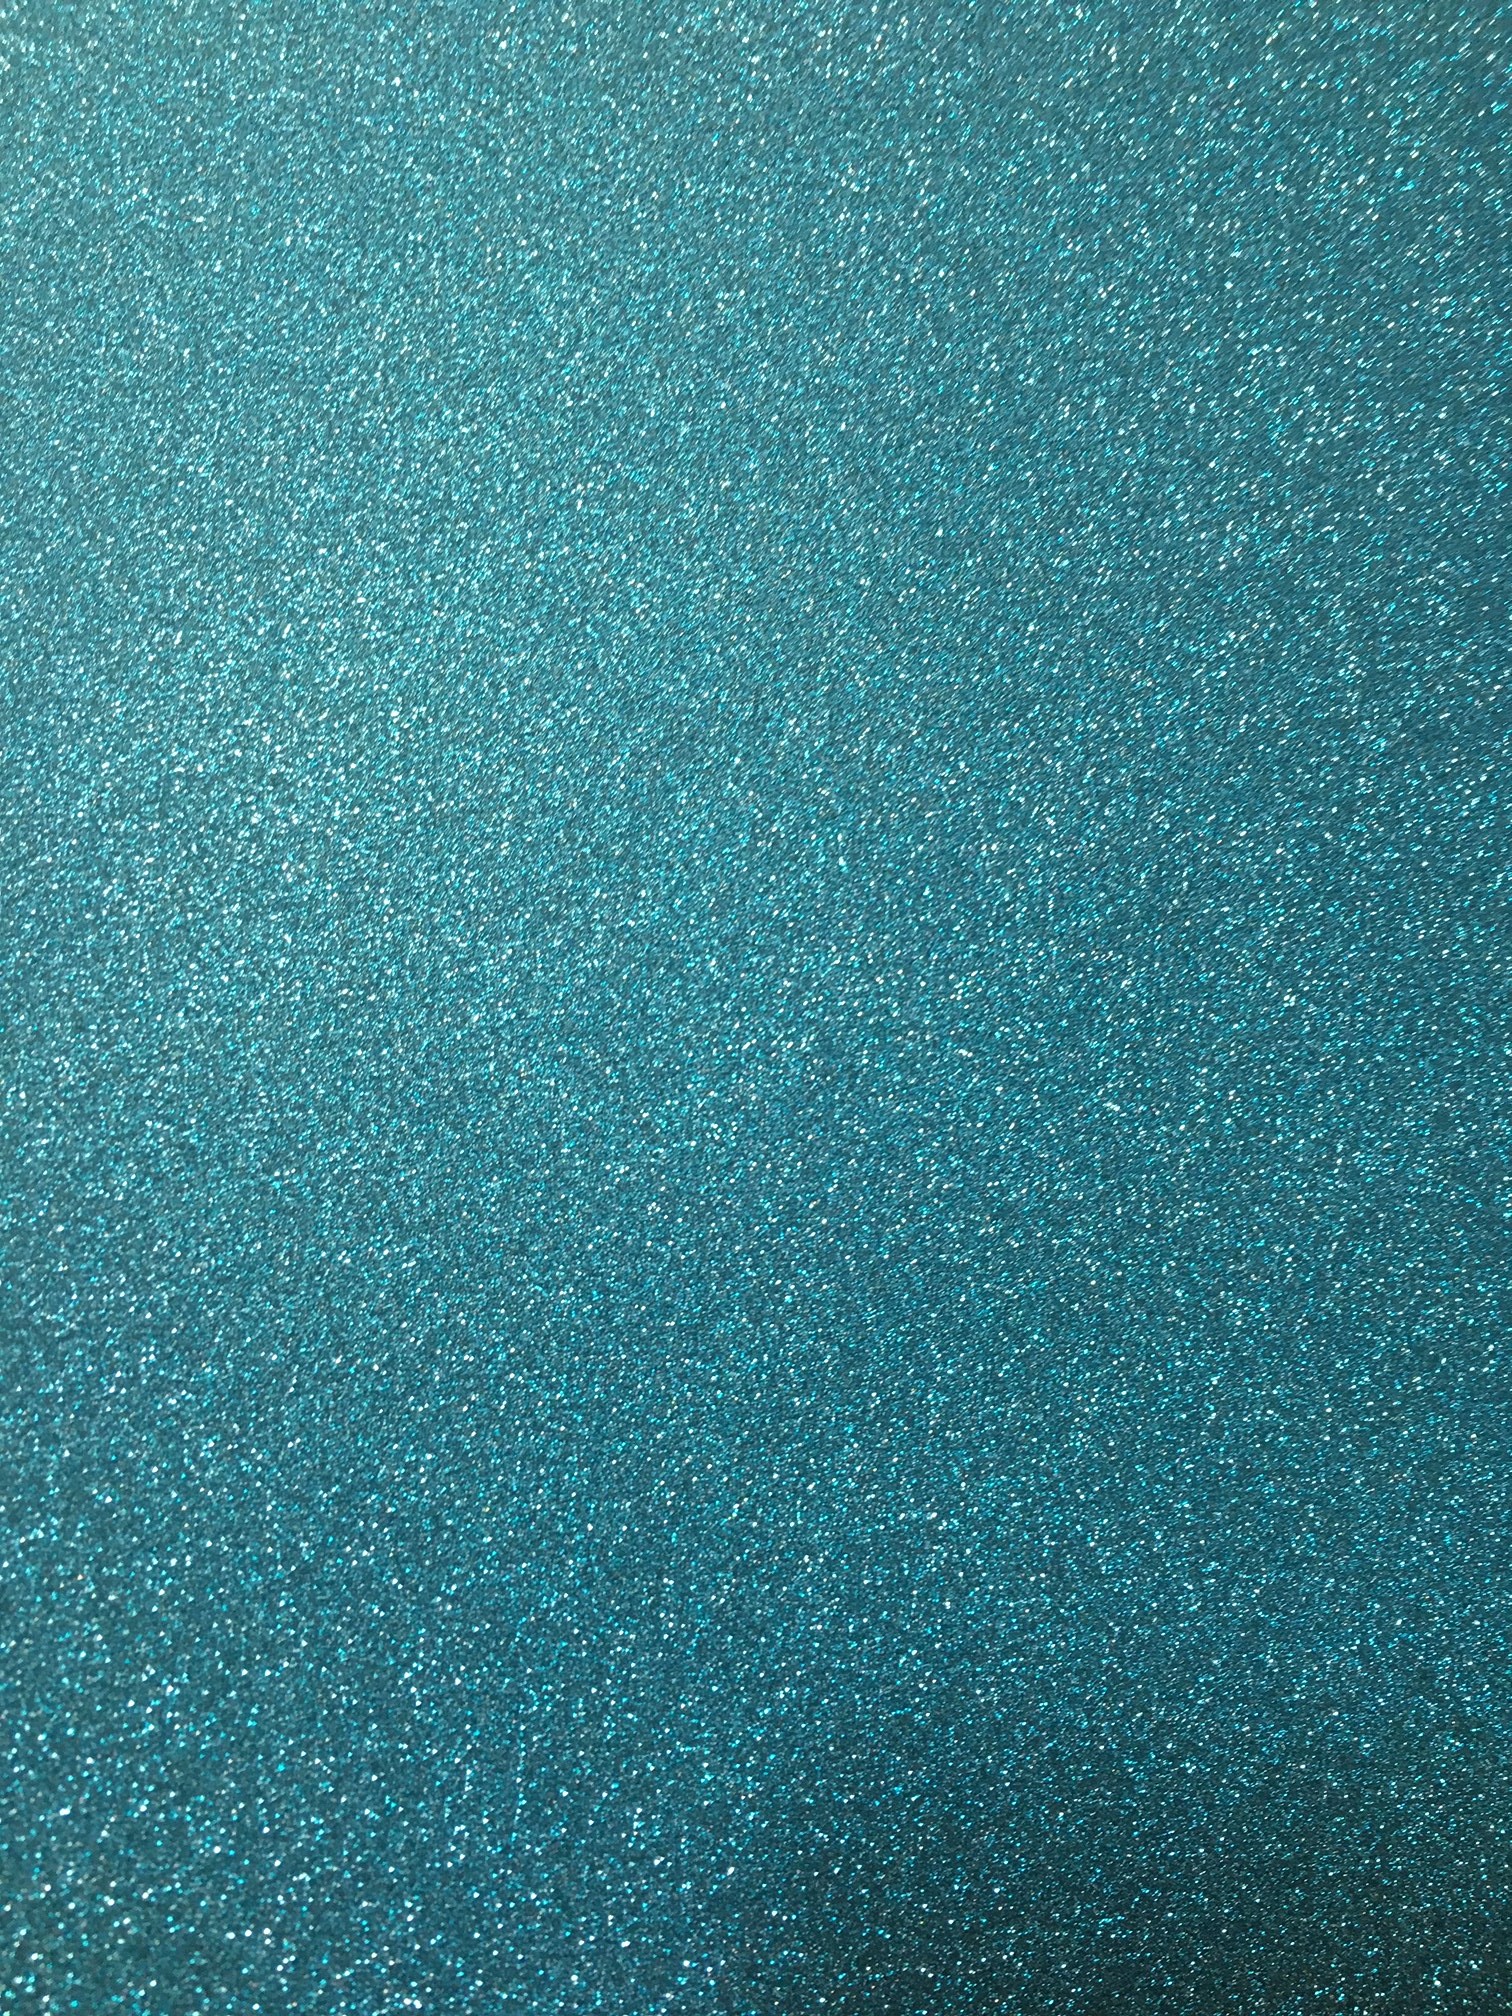 Glitter blue